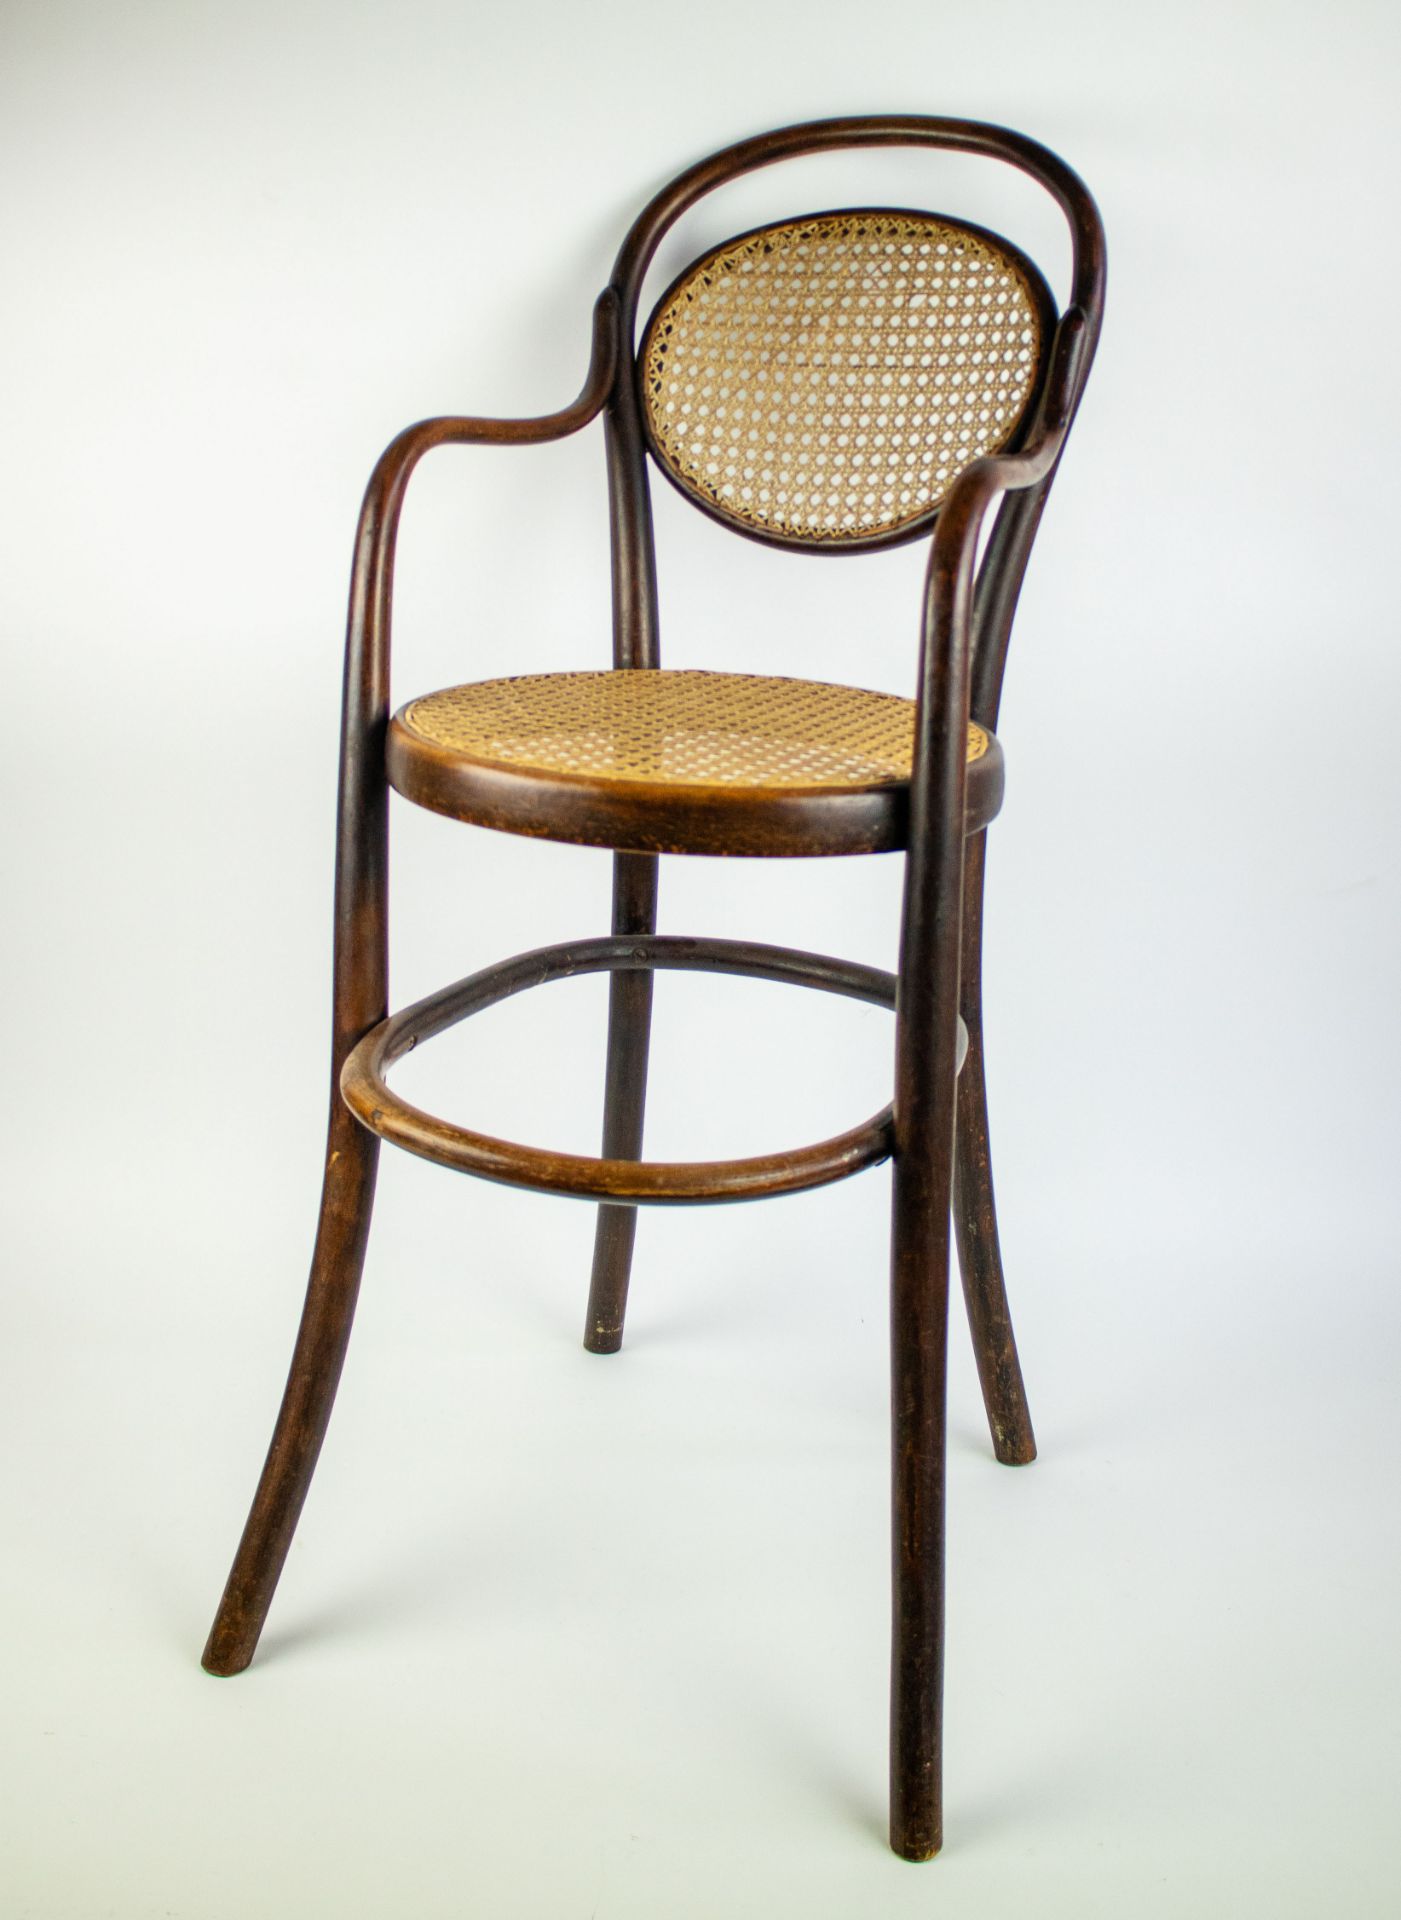 A Tonnet chair